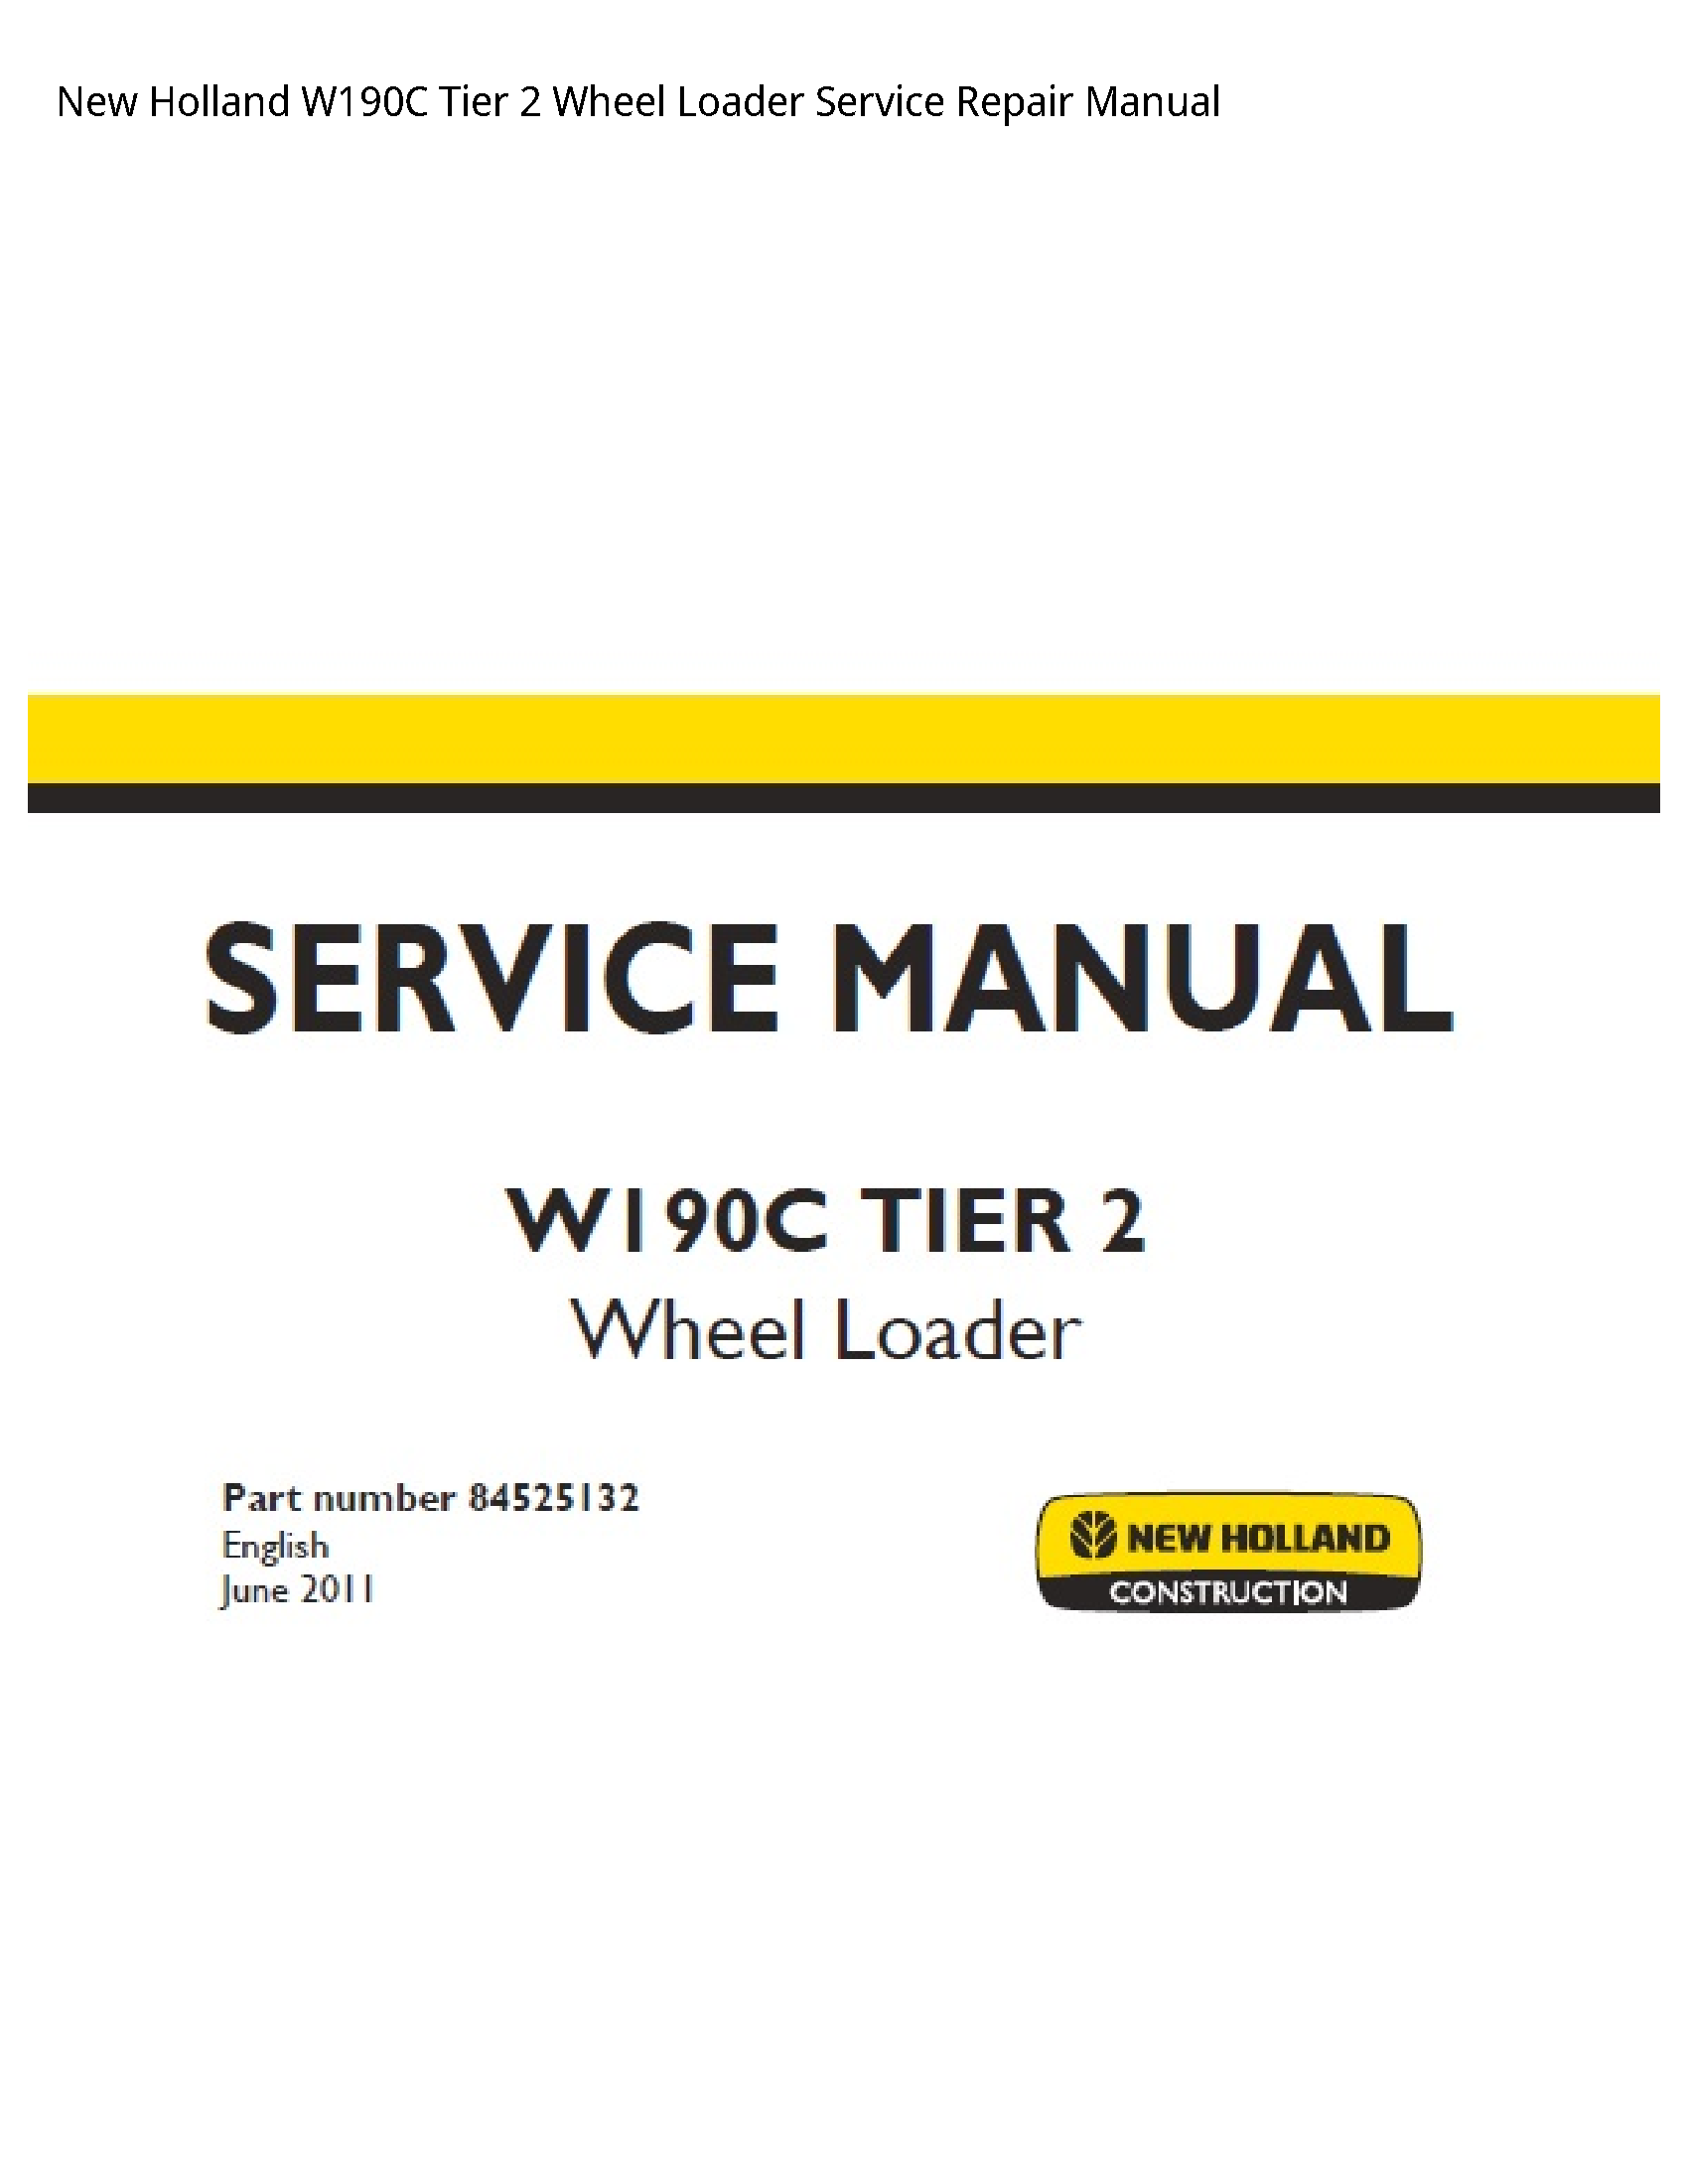 New Holland W190C Tier Wheel Loader manual